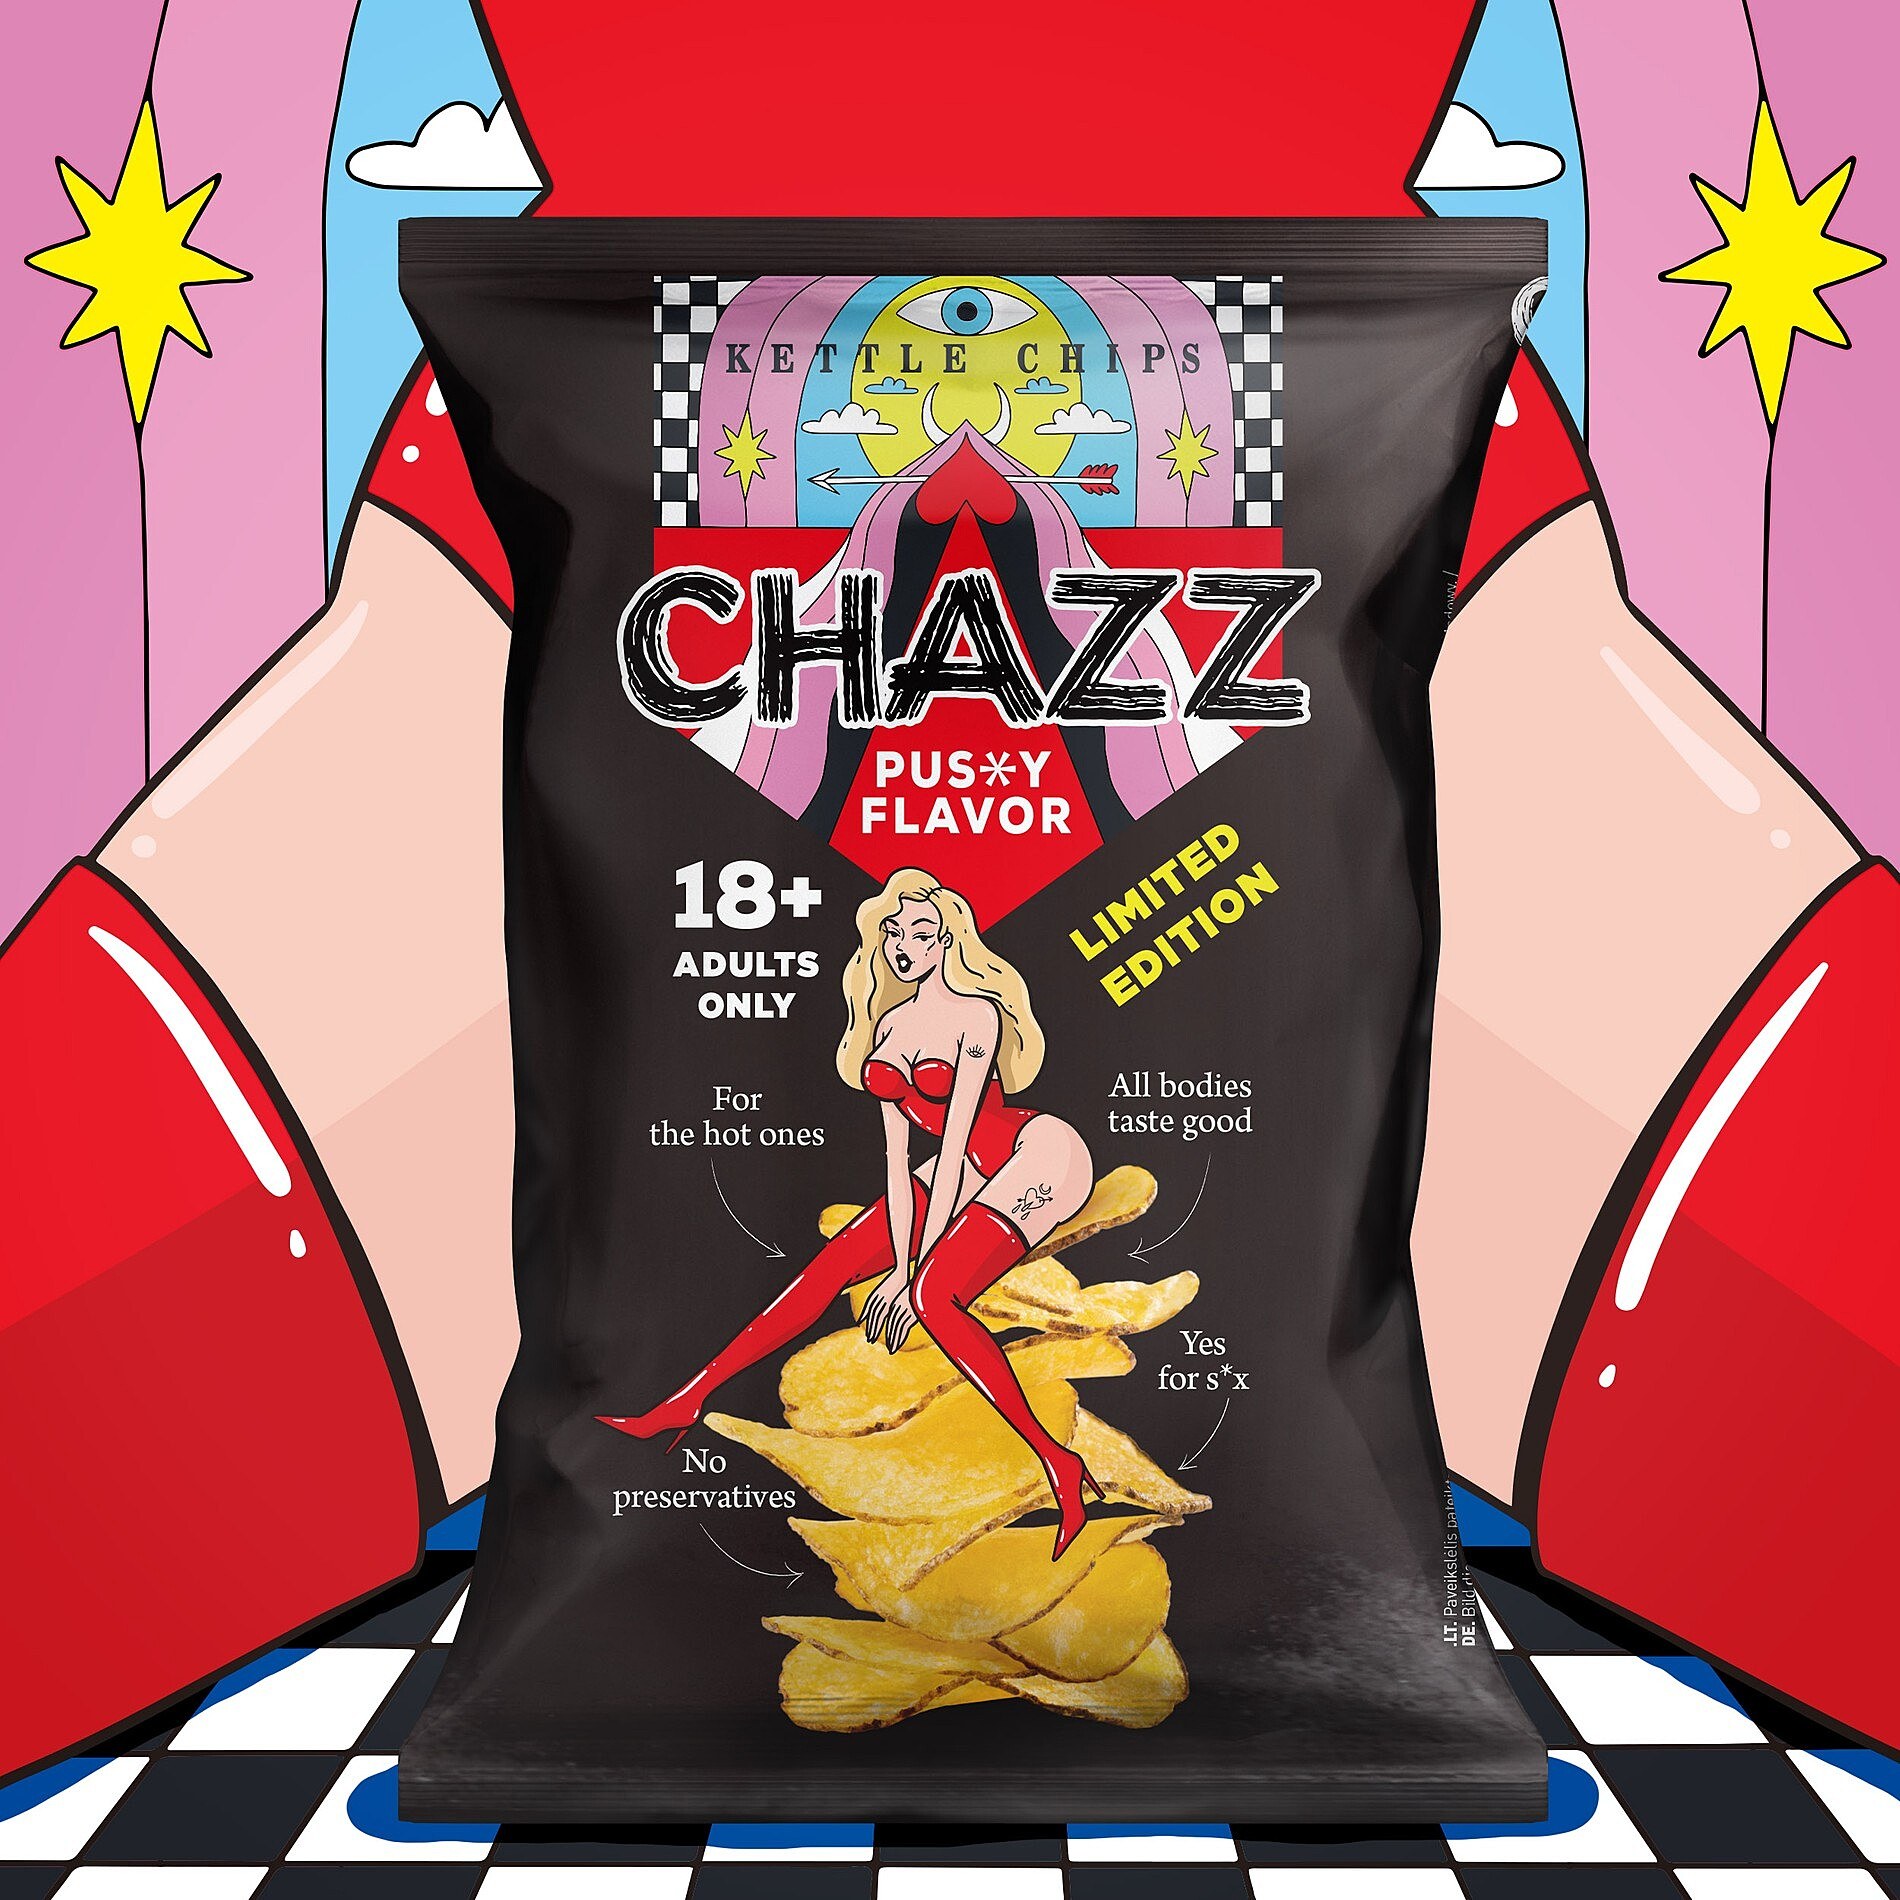 Chazz chips vagina